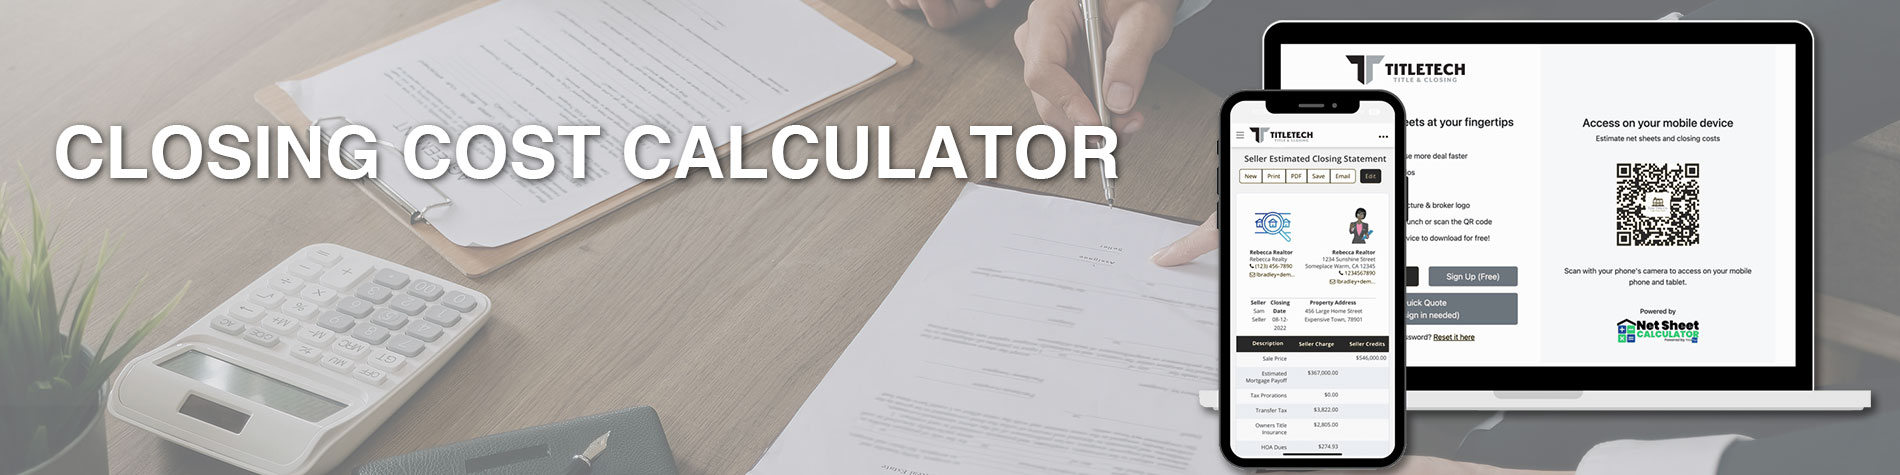 Closing Cost Calculator page header